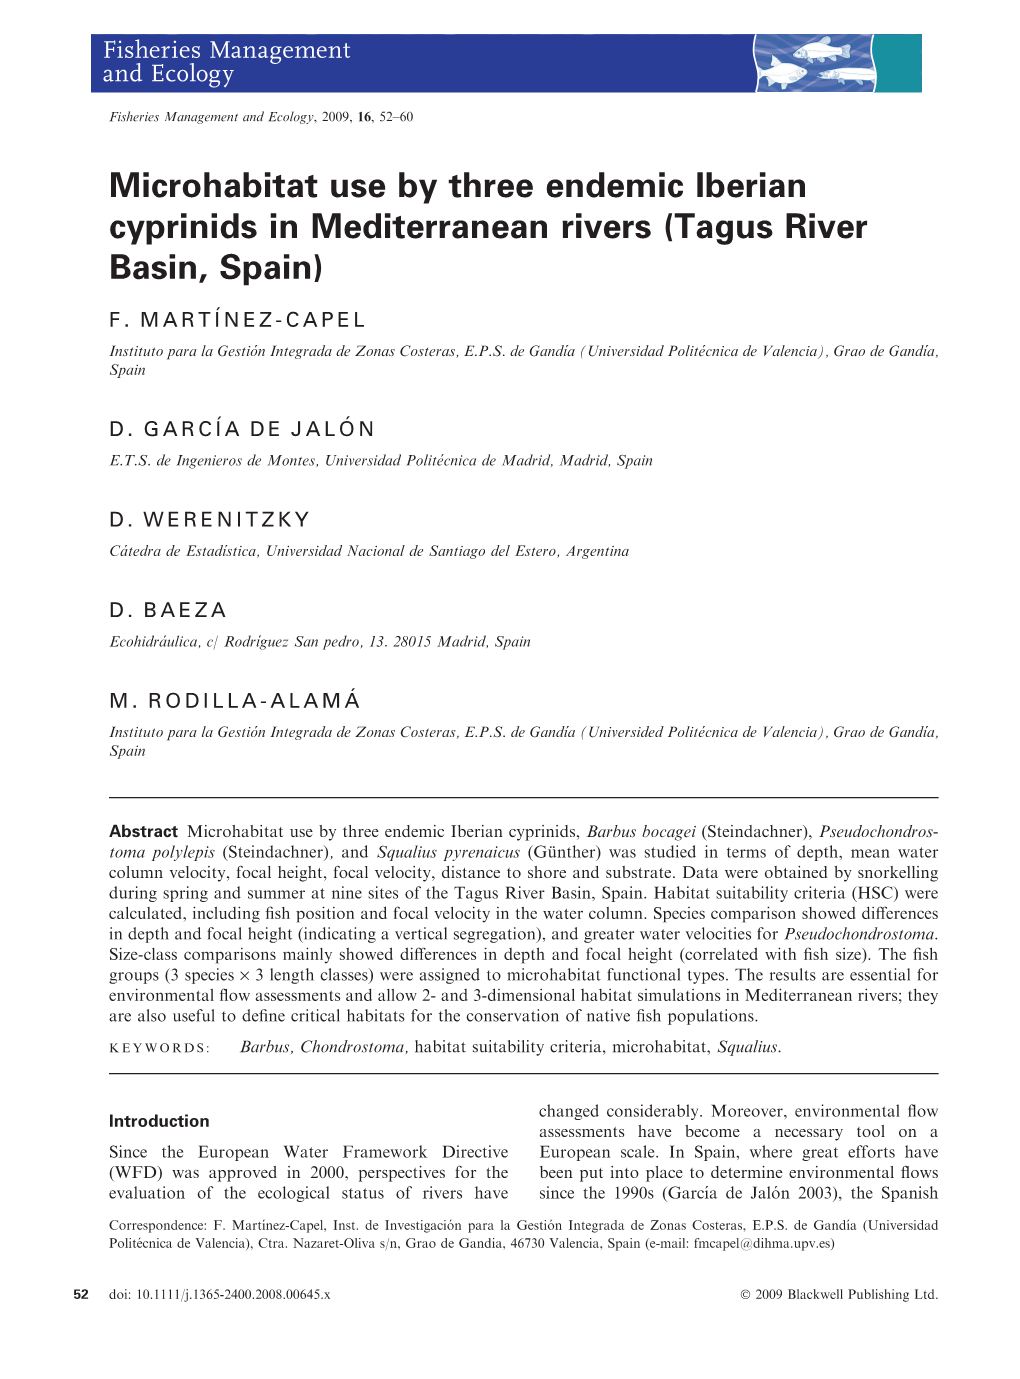 Microhabitat Use by Three Endemic Iberian Cyprinids in Mediterranean Rivers (Tagus River Basin, Spain)